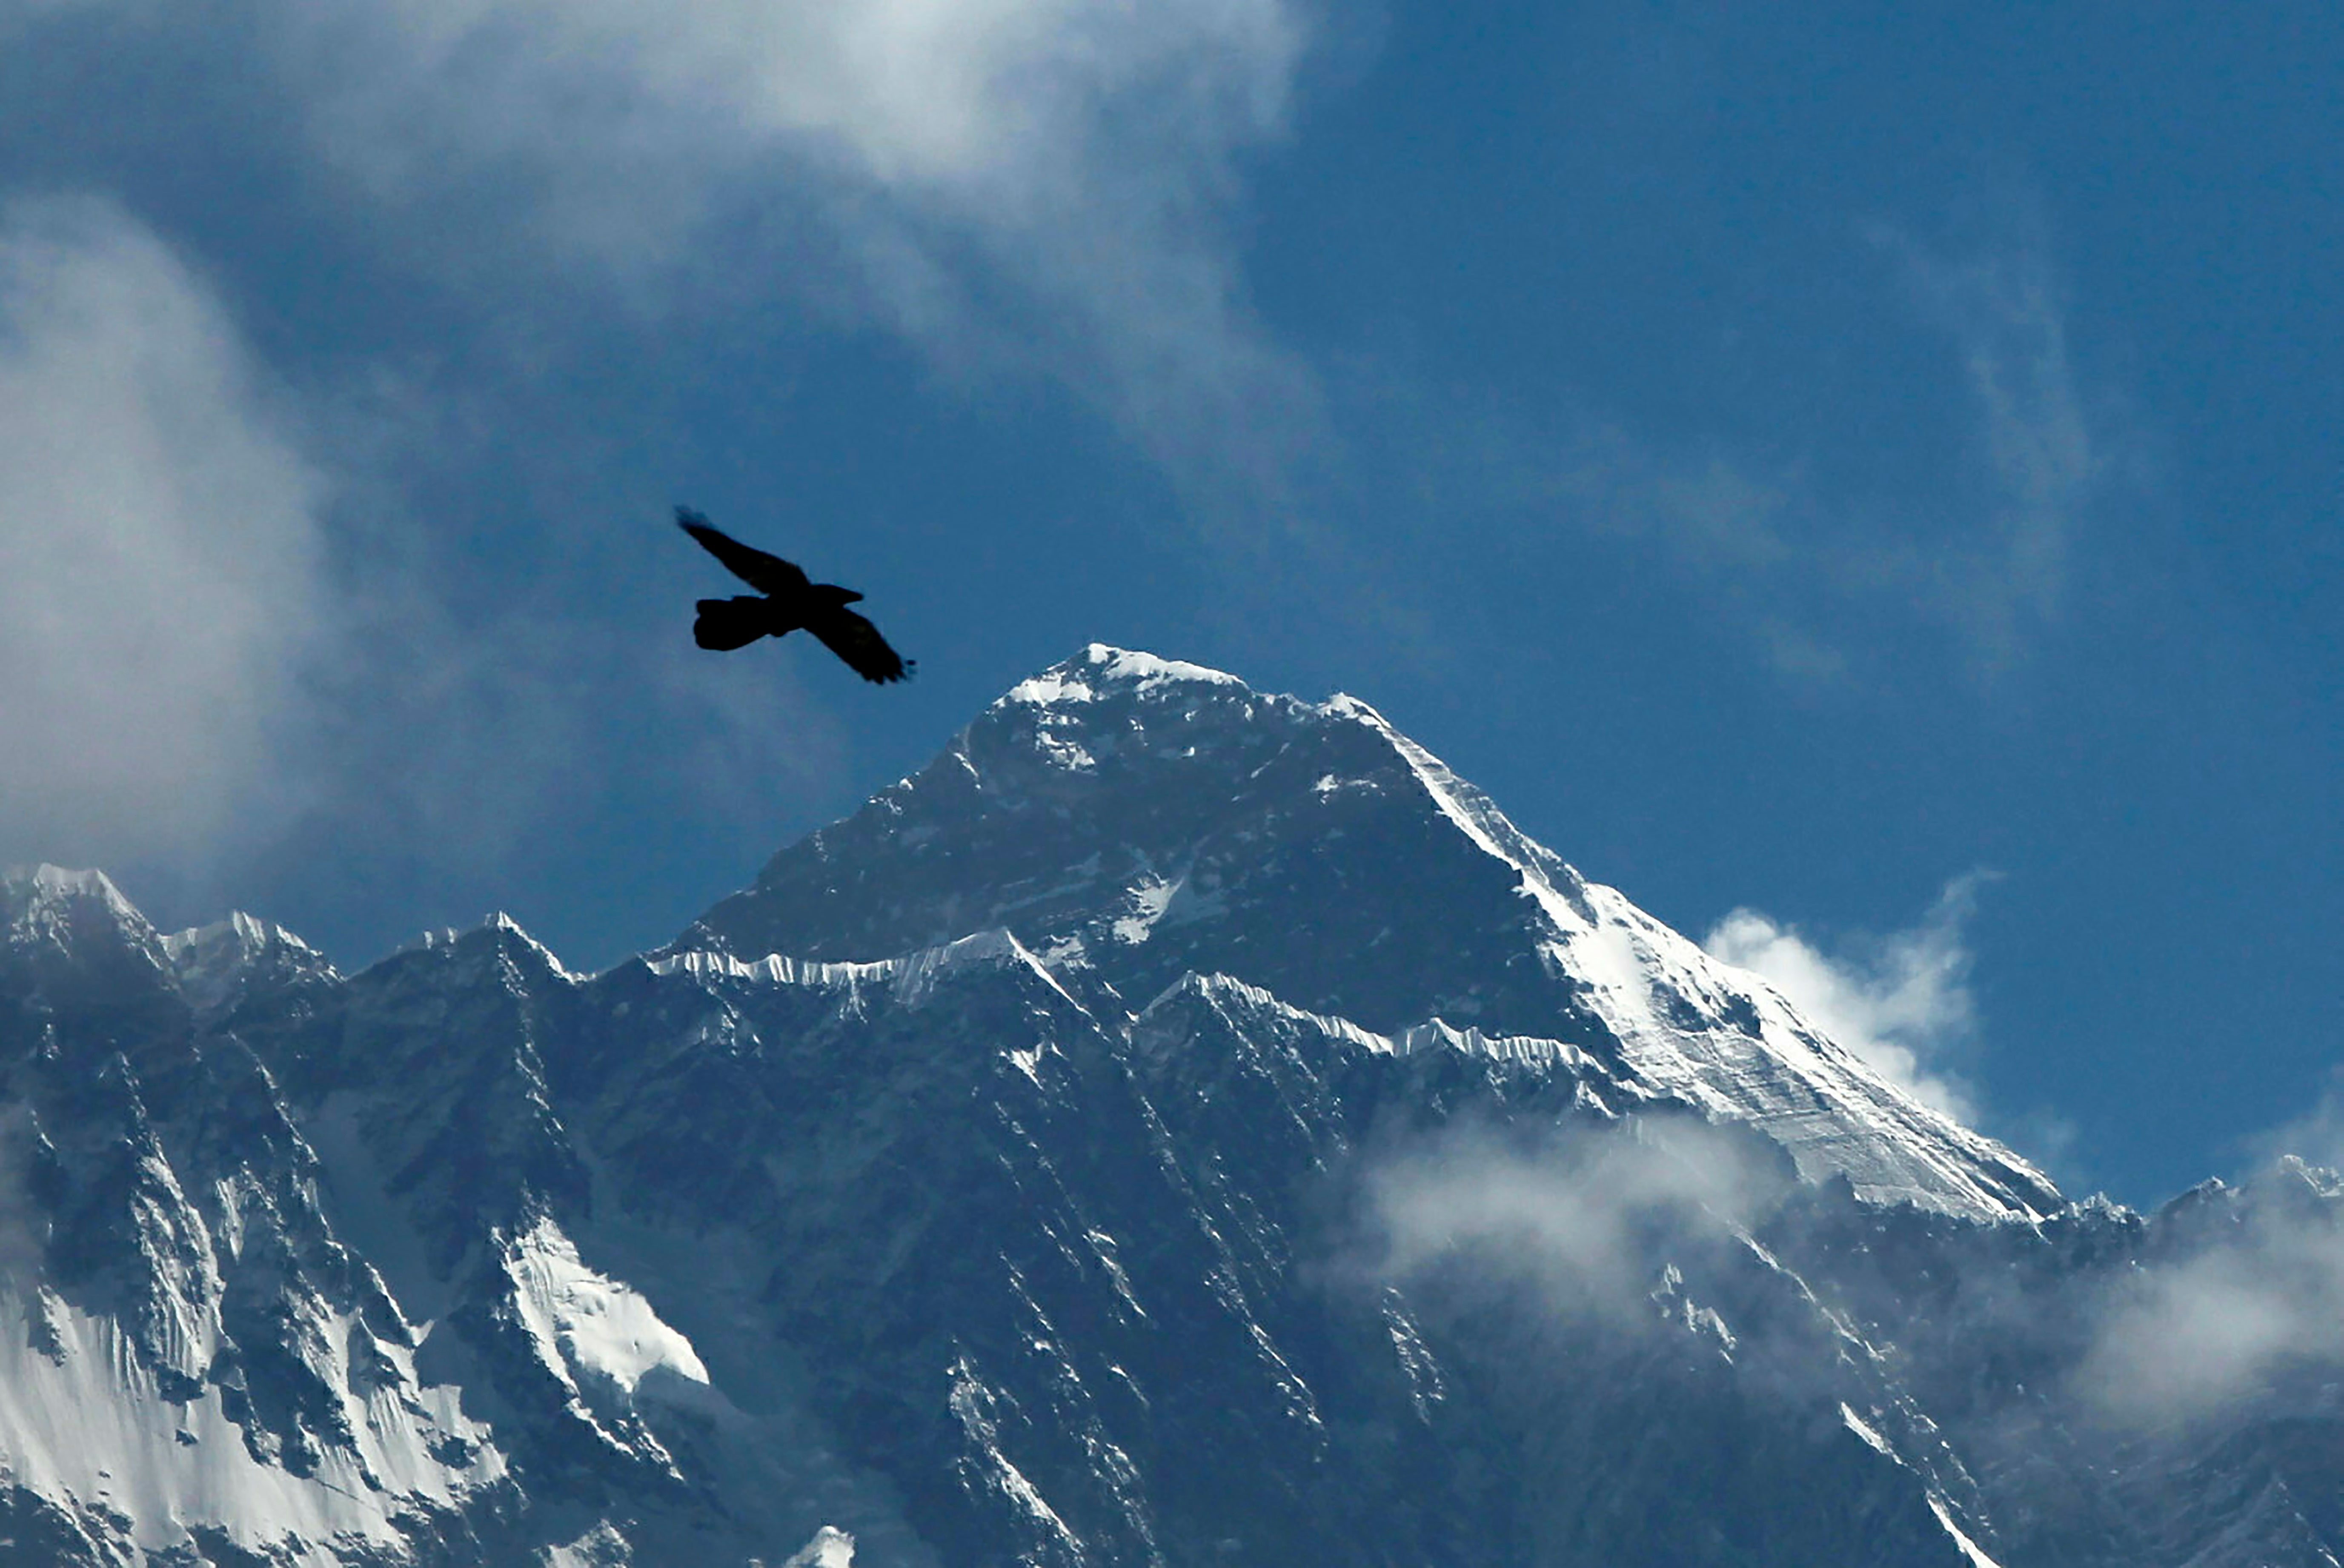 Mount Everest can be a treacherous climb